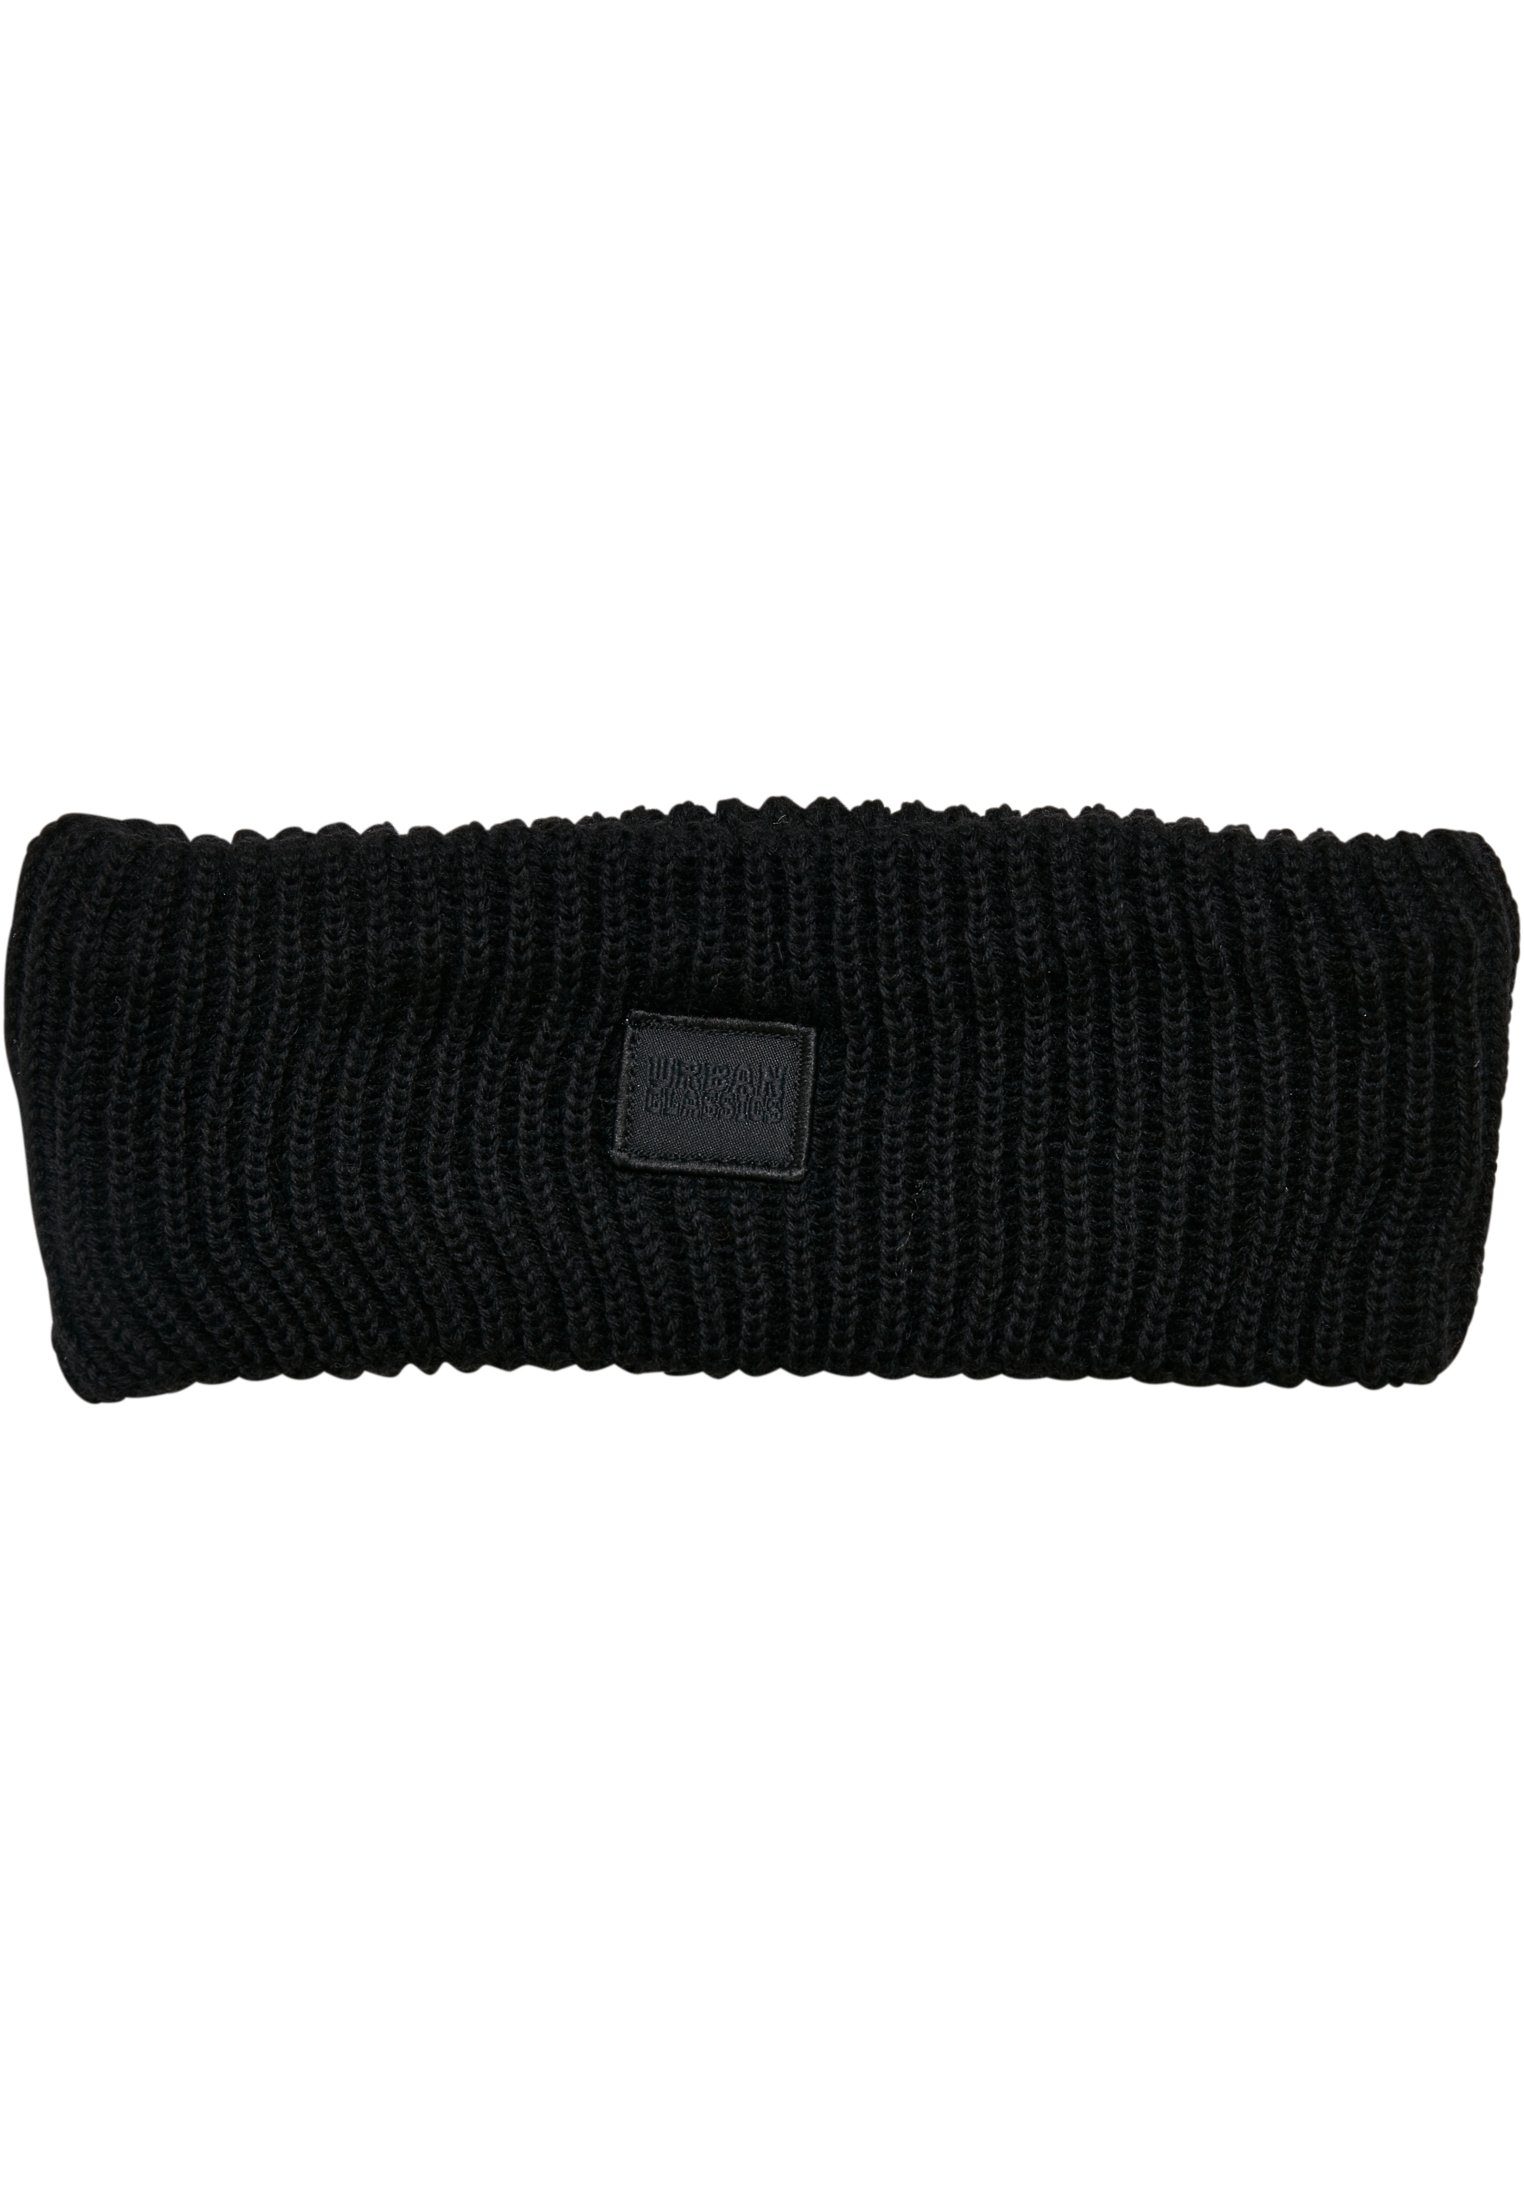 URBAN CLASSICS Beanie Unisex Knitted Wool Headband (1-St) | Beanies